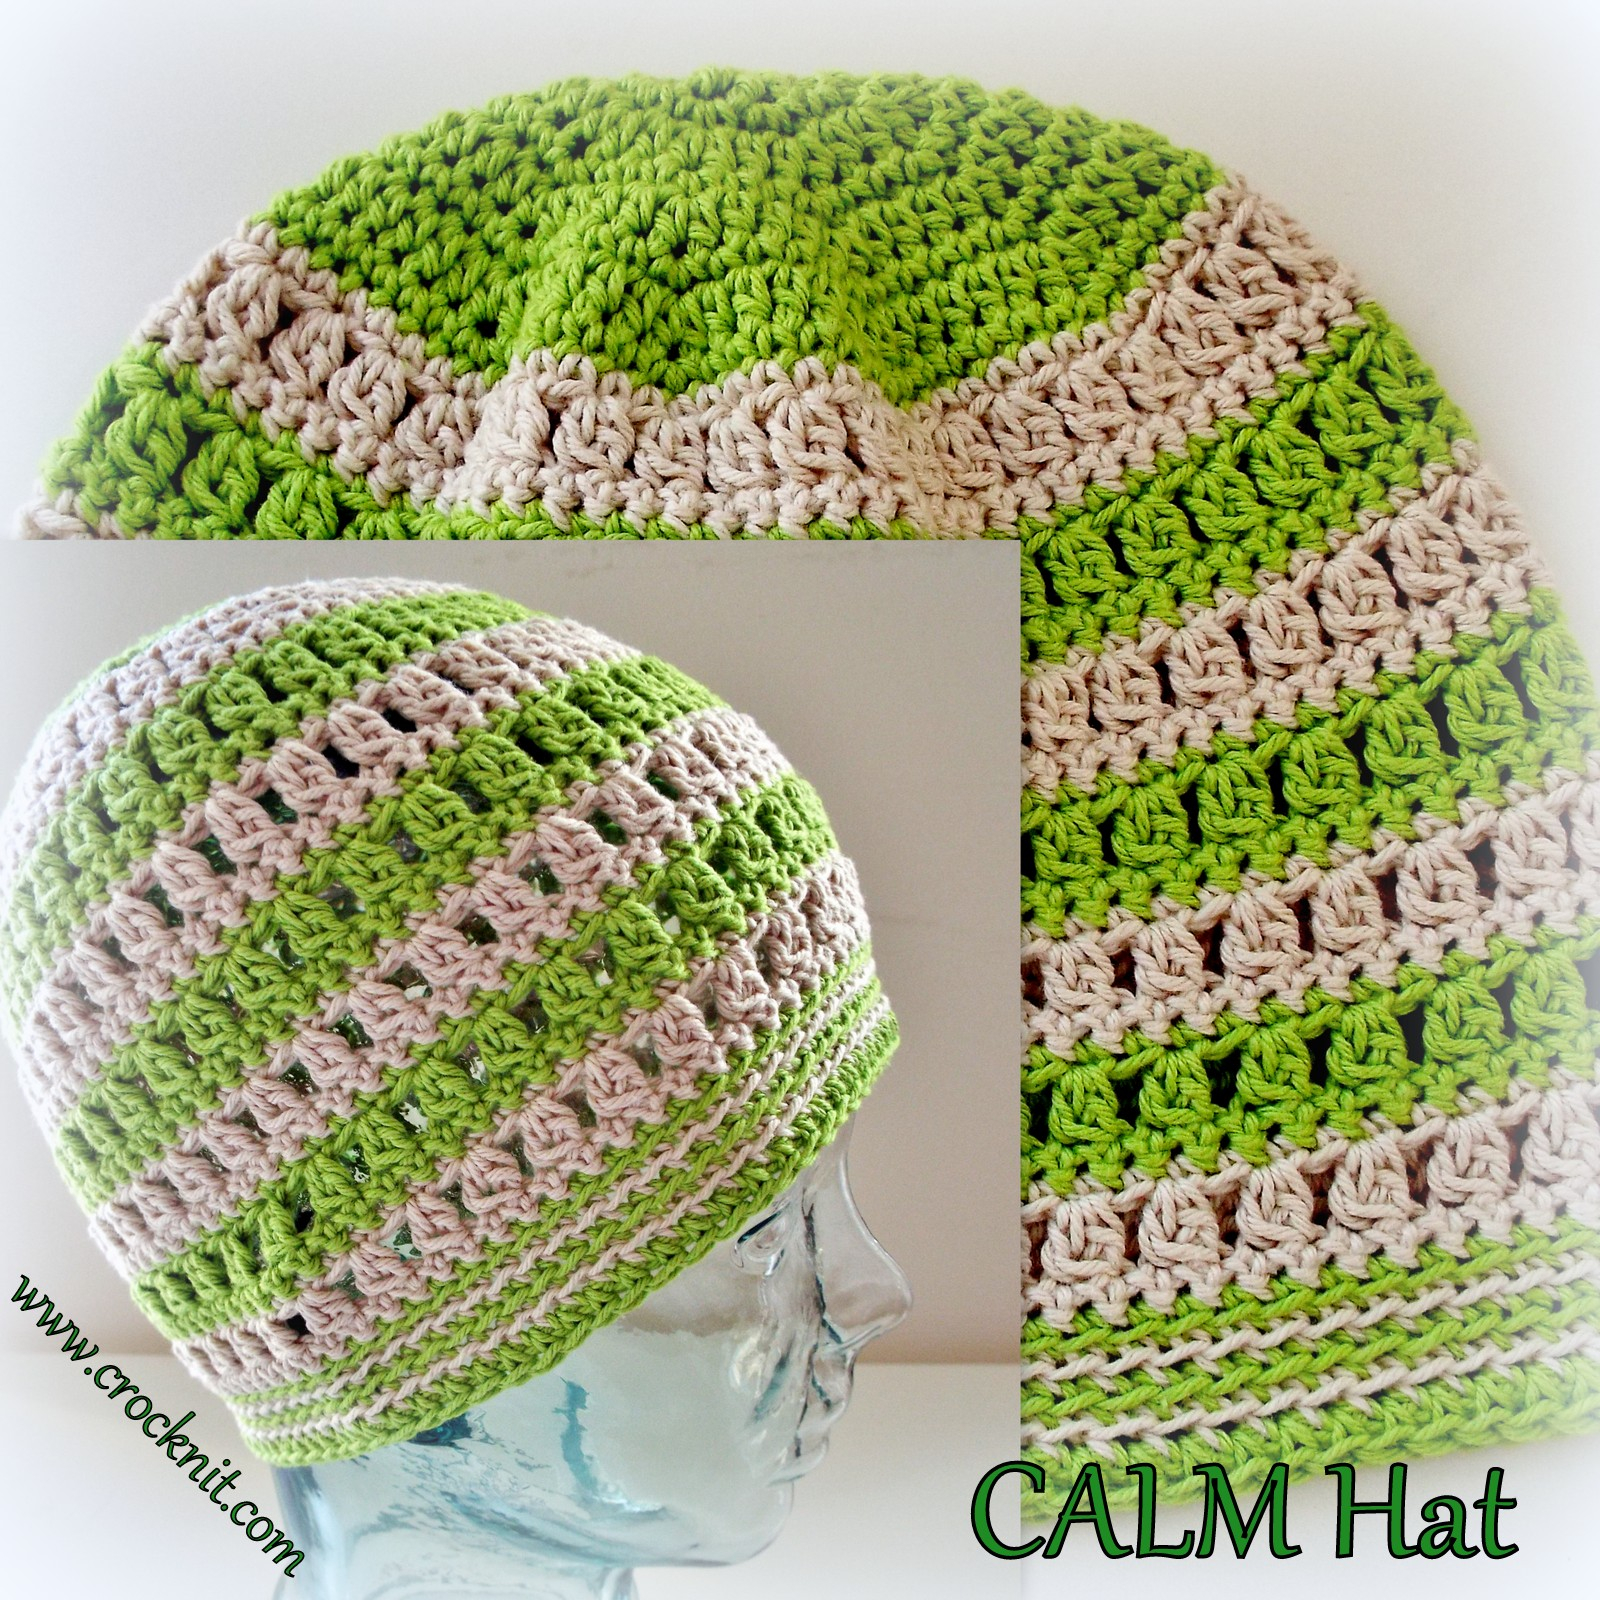 Crochet Chemo Caps Free Patterns Microcknit Creations Sleep Hats Free Crochet Pattern 4 Calm Hat